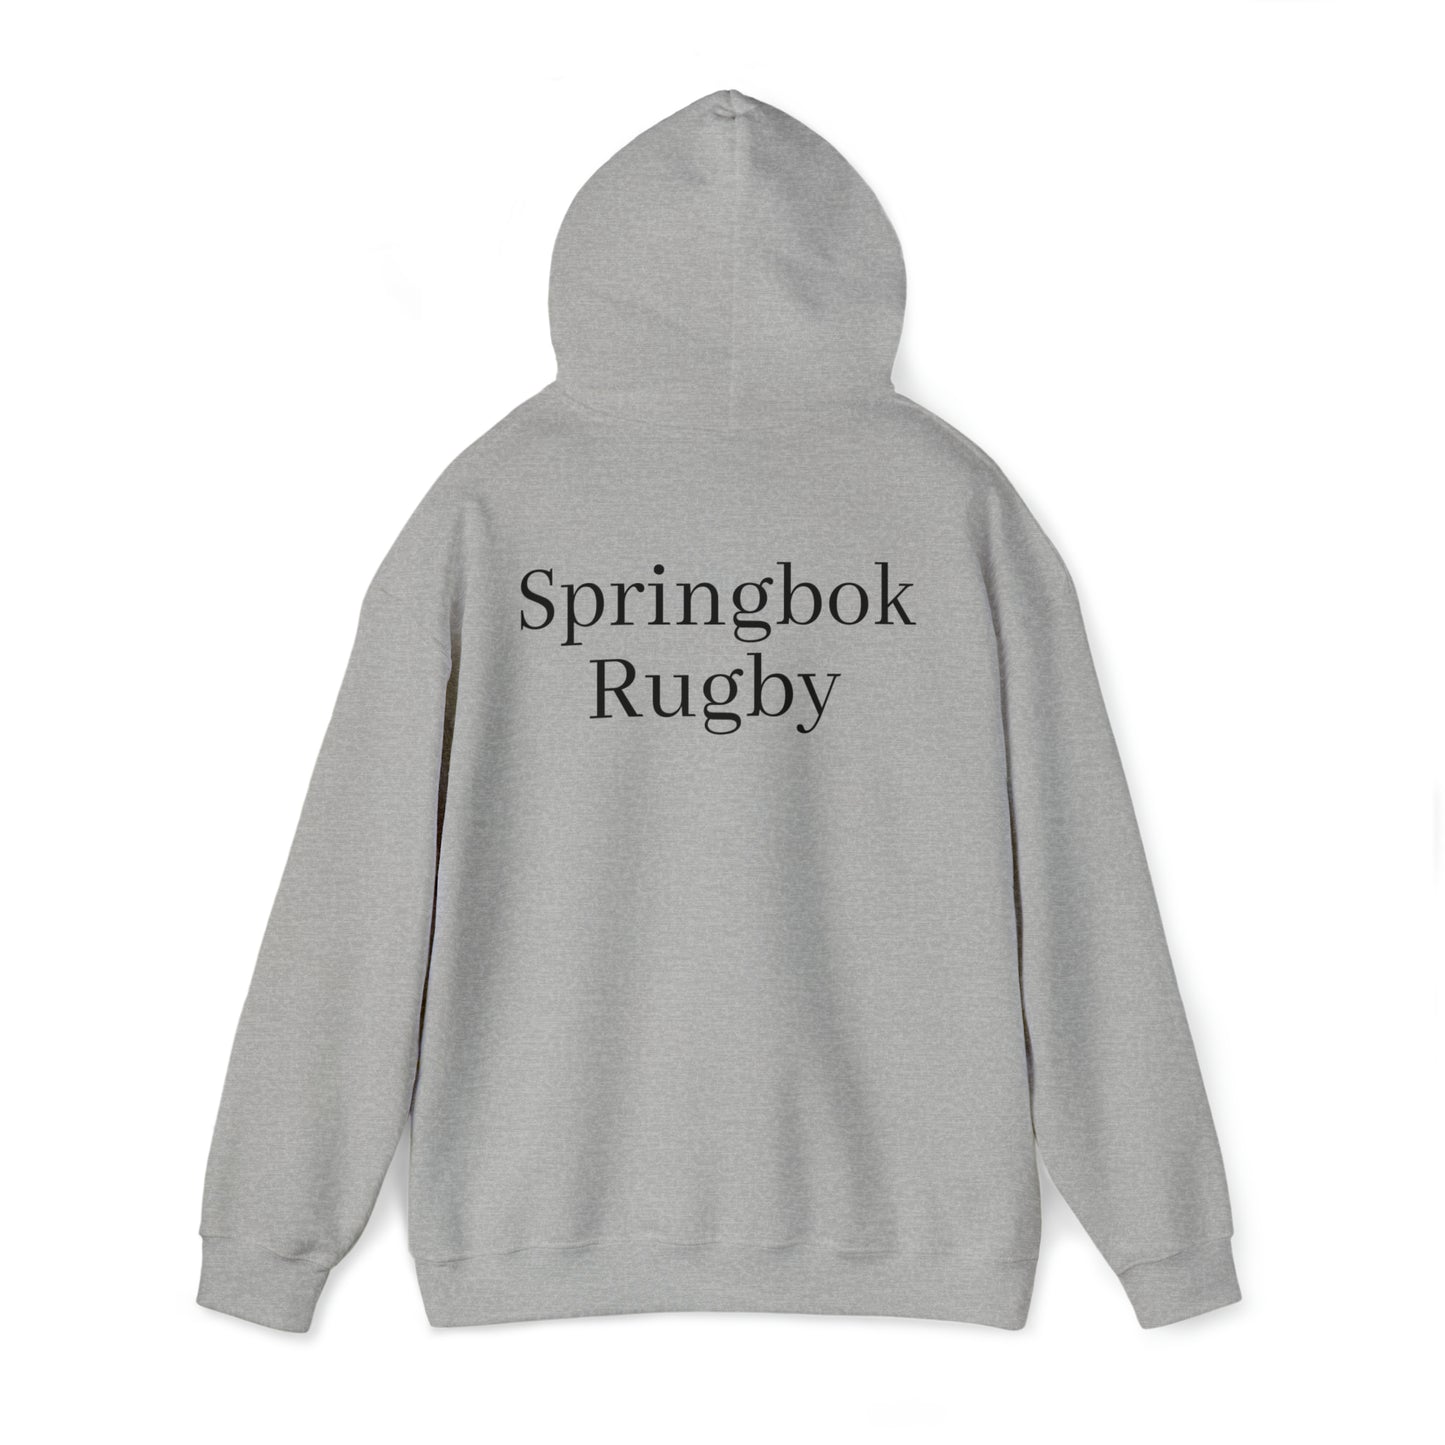 Springboks Celebrating with RWC - light hoodies